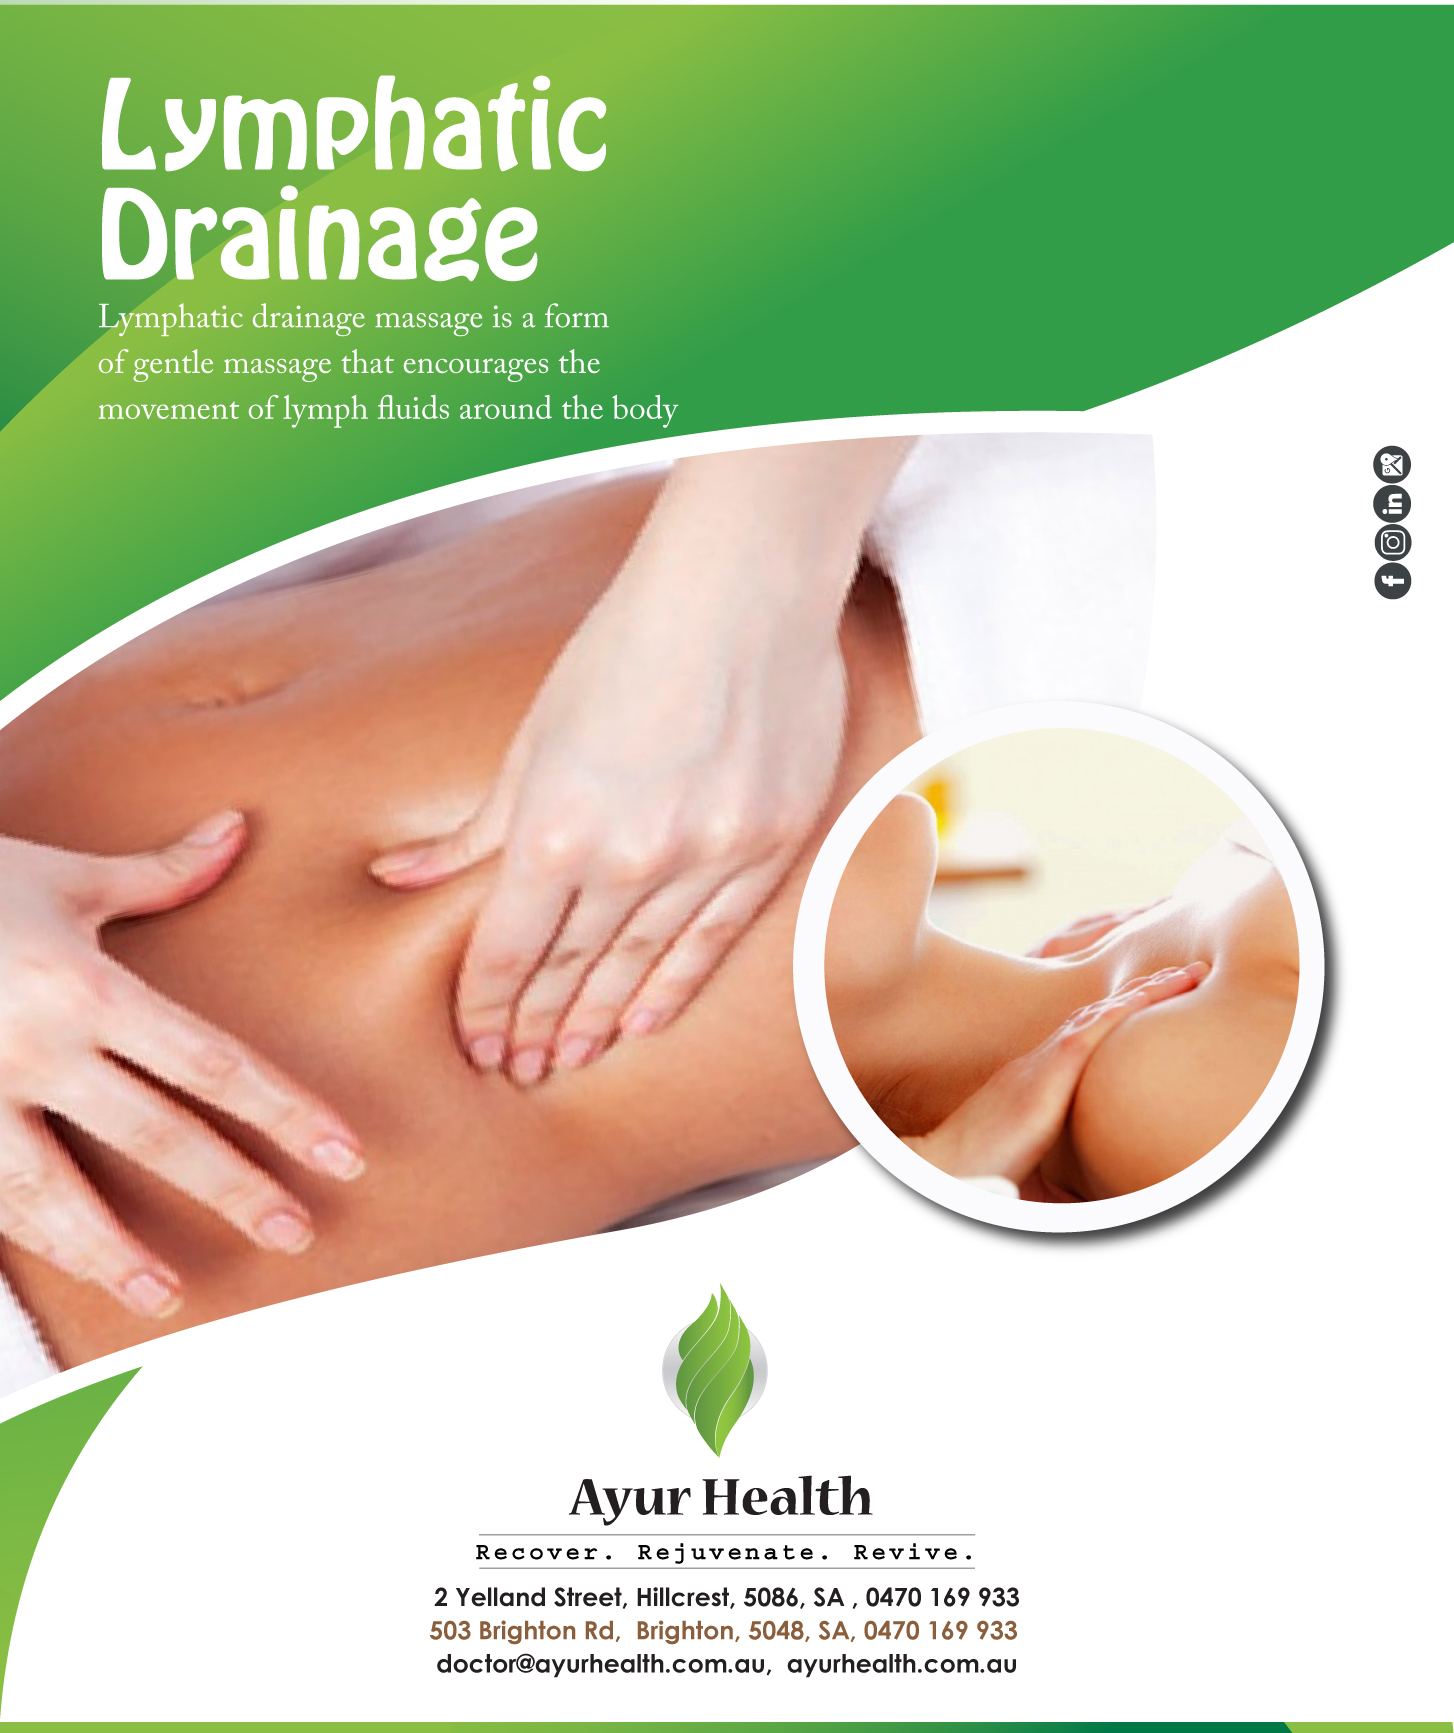 12 benefits of Lymphatic Drainage Massage